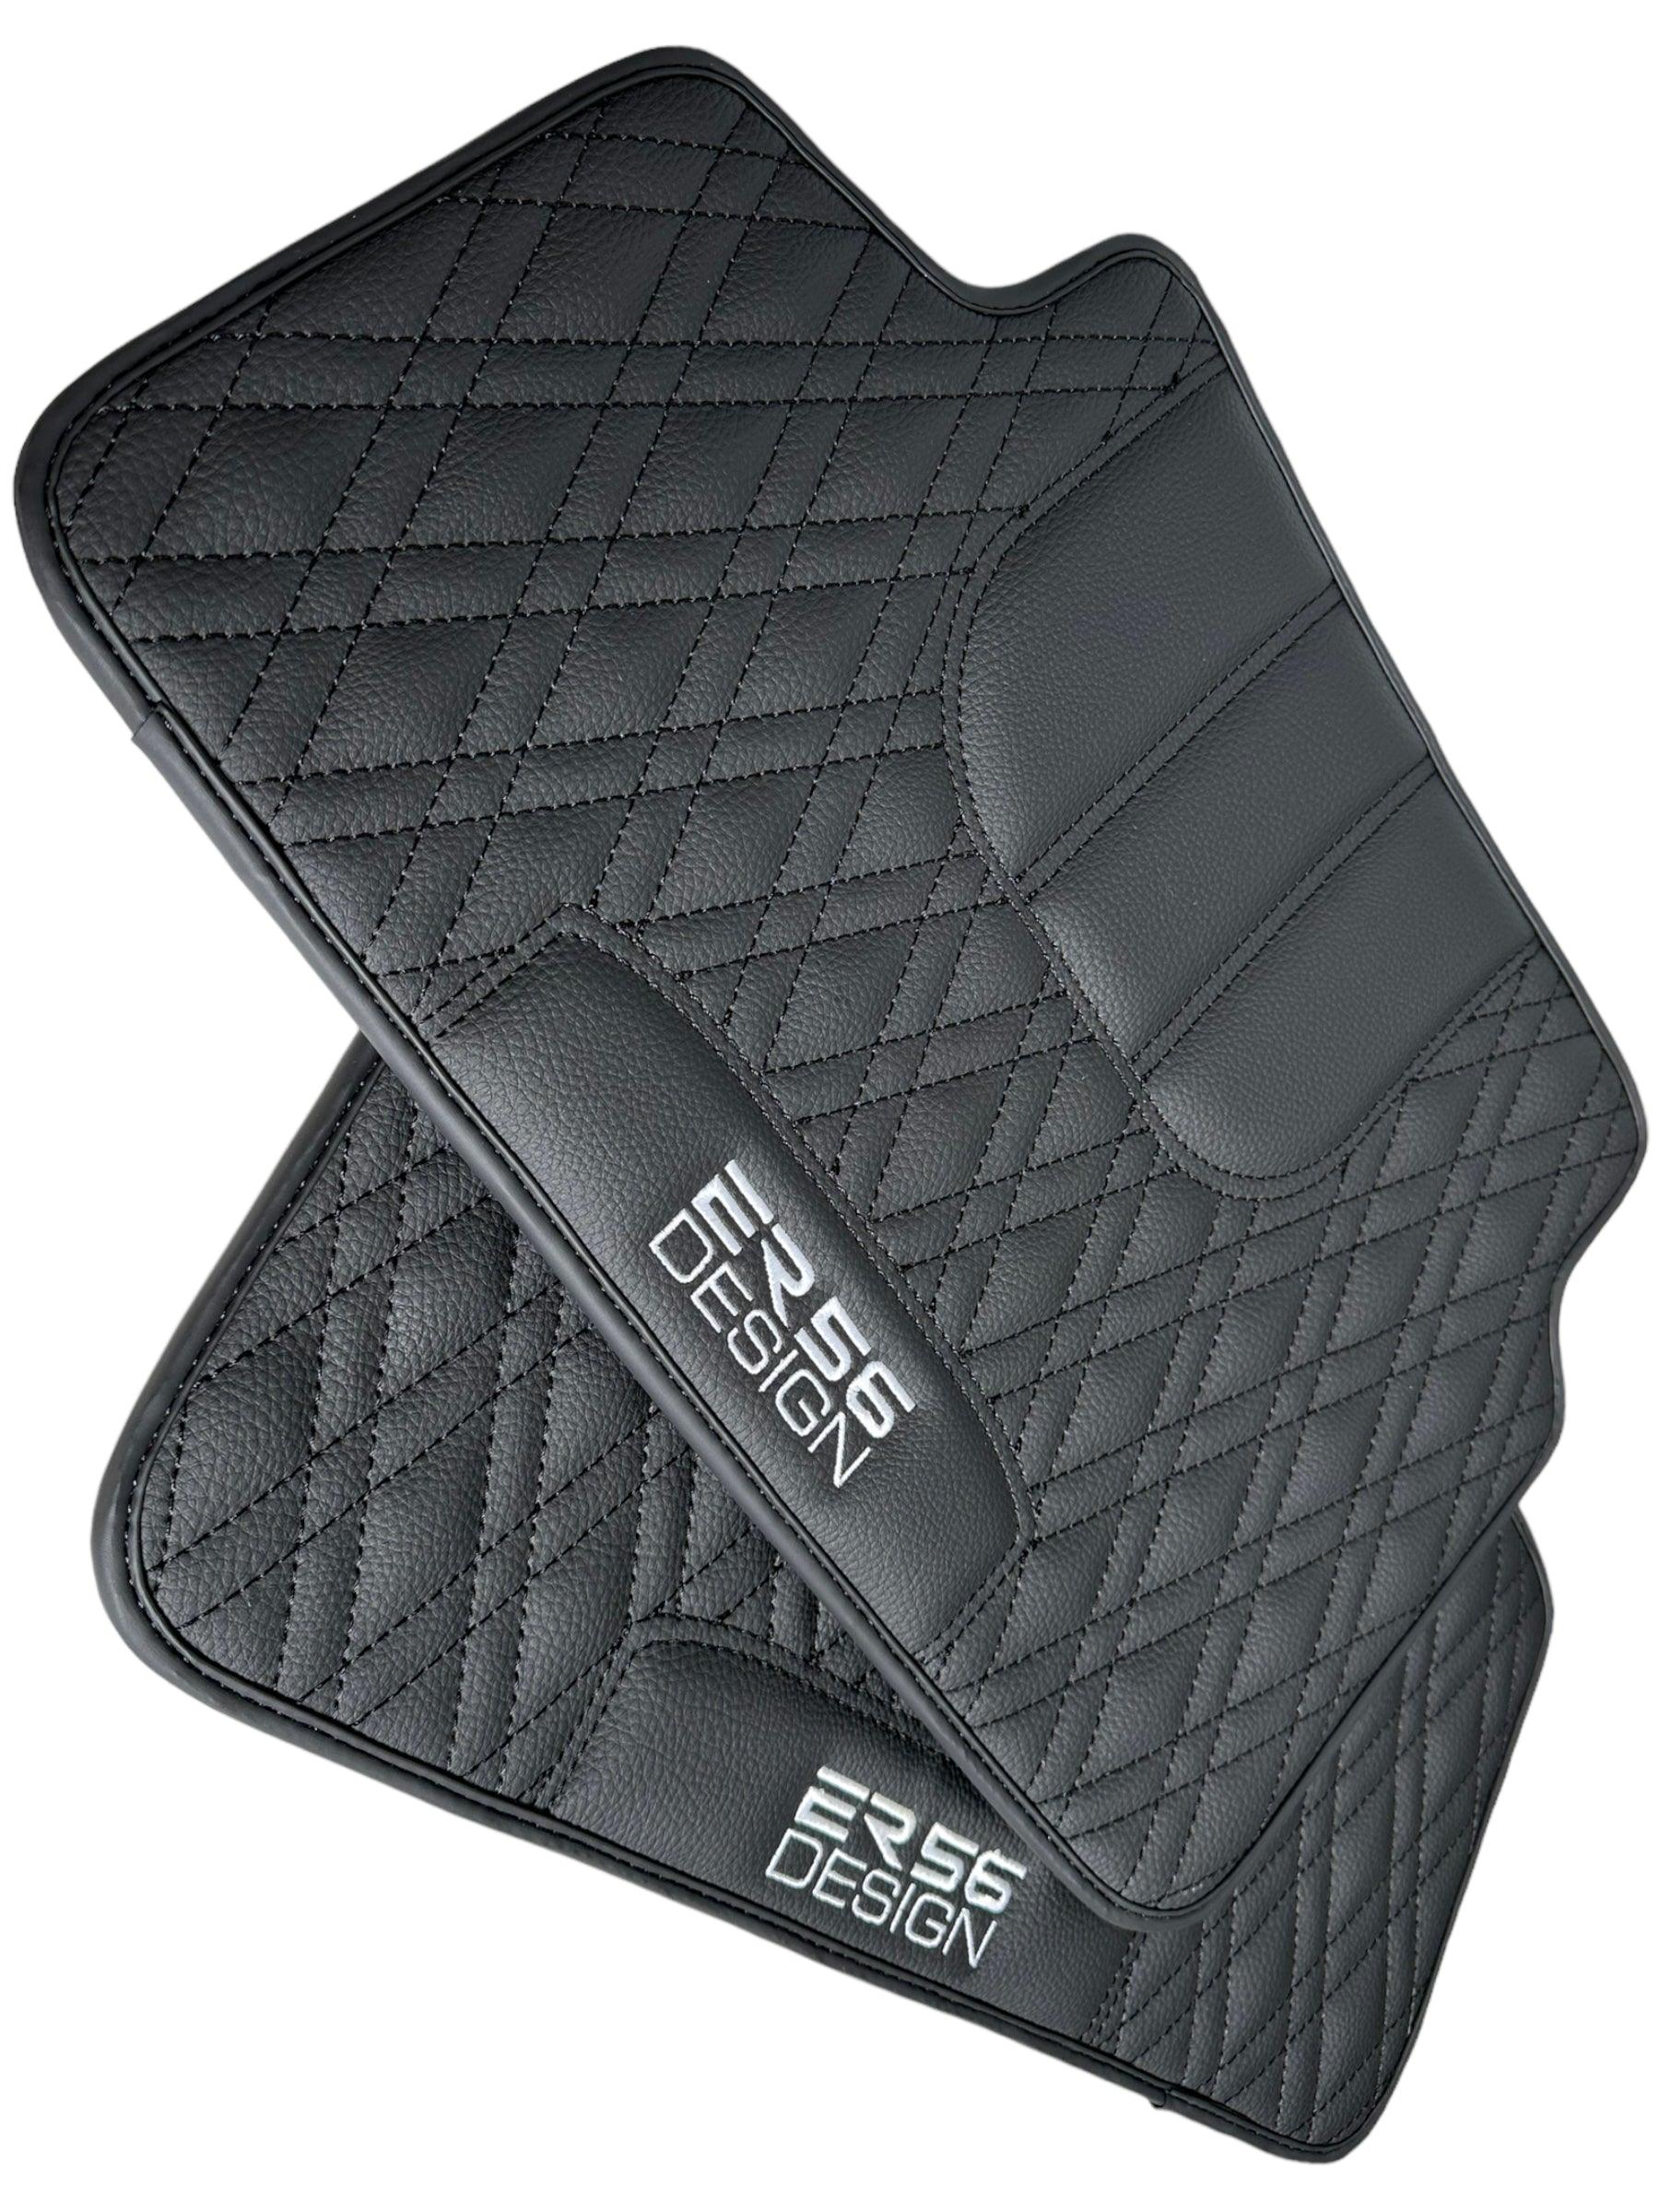 Floor Mats For BMW X3 - E83 SUV Black Leather Er56 Design - AutoWin